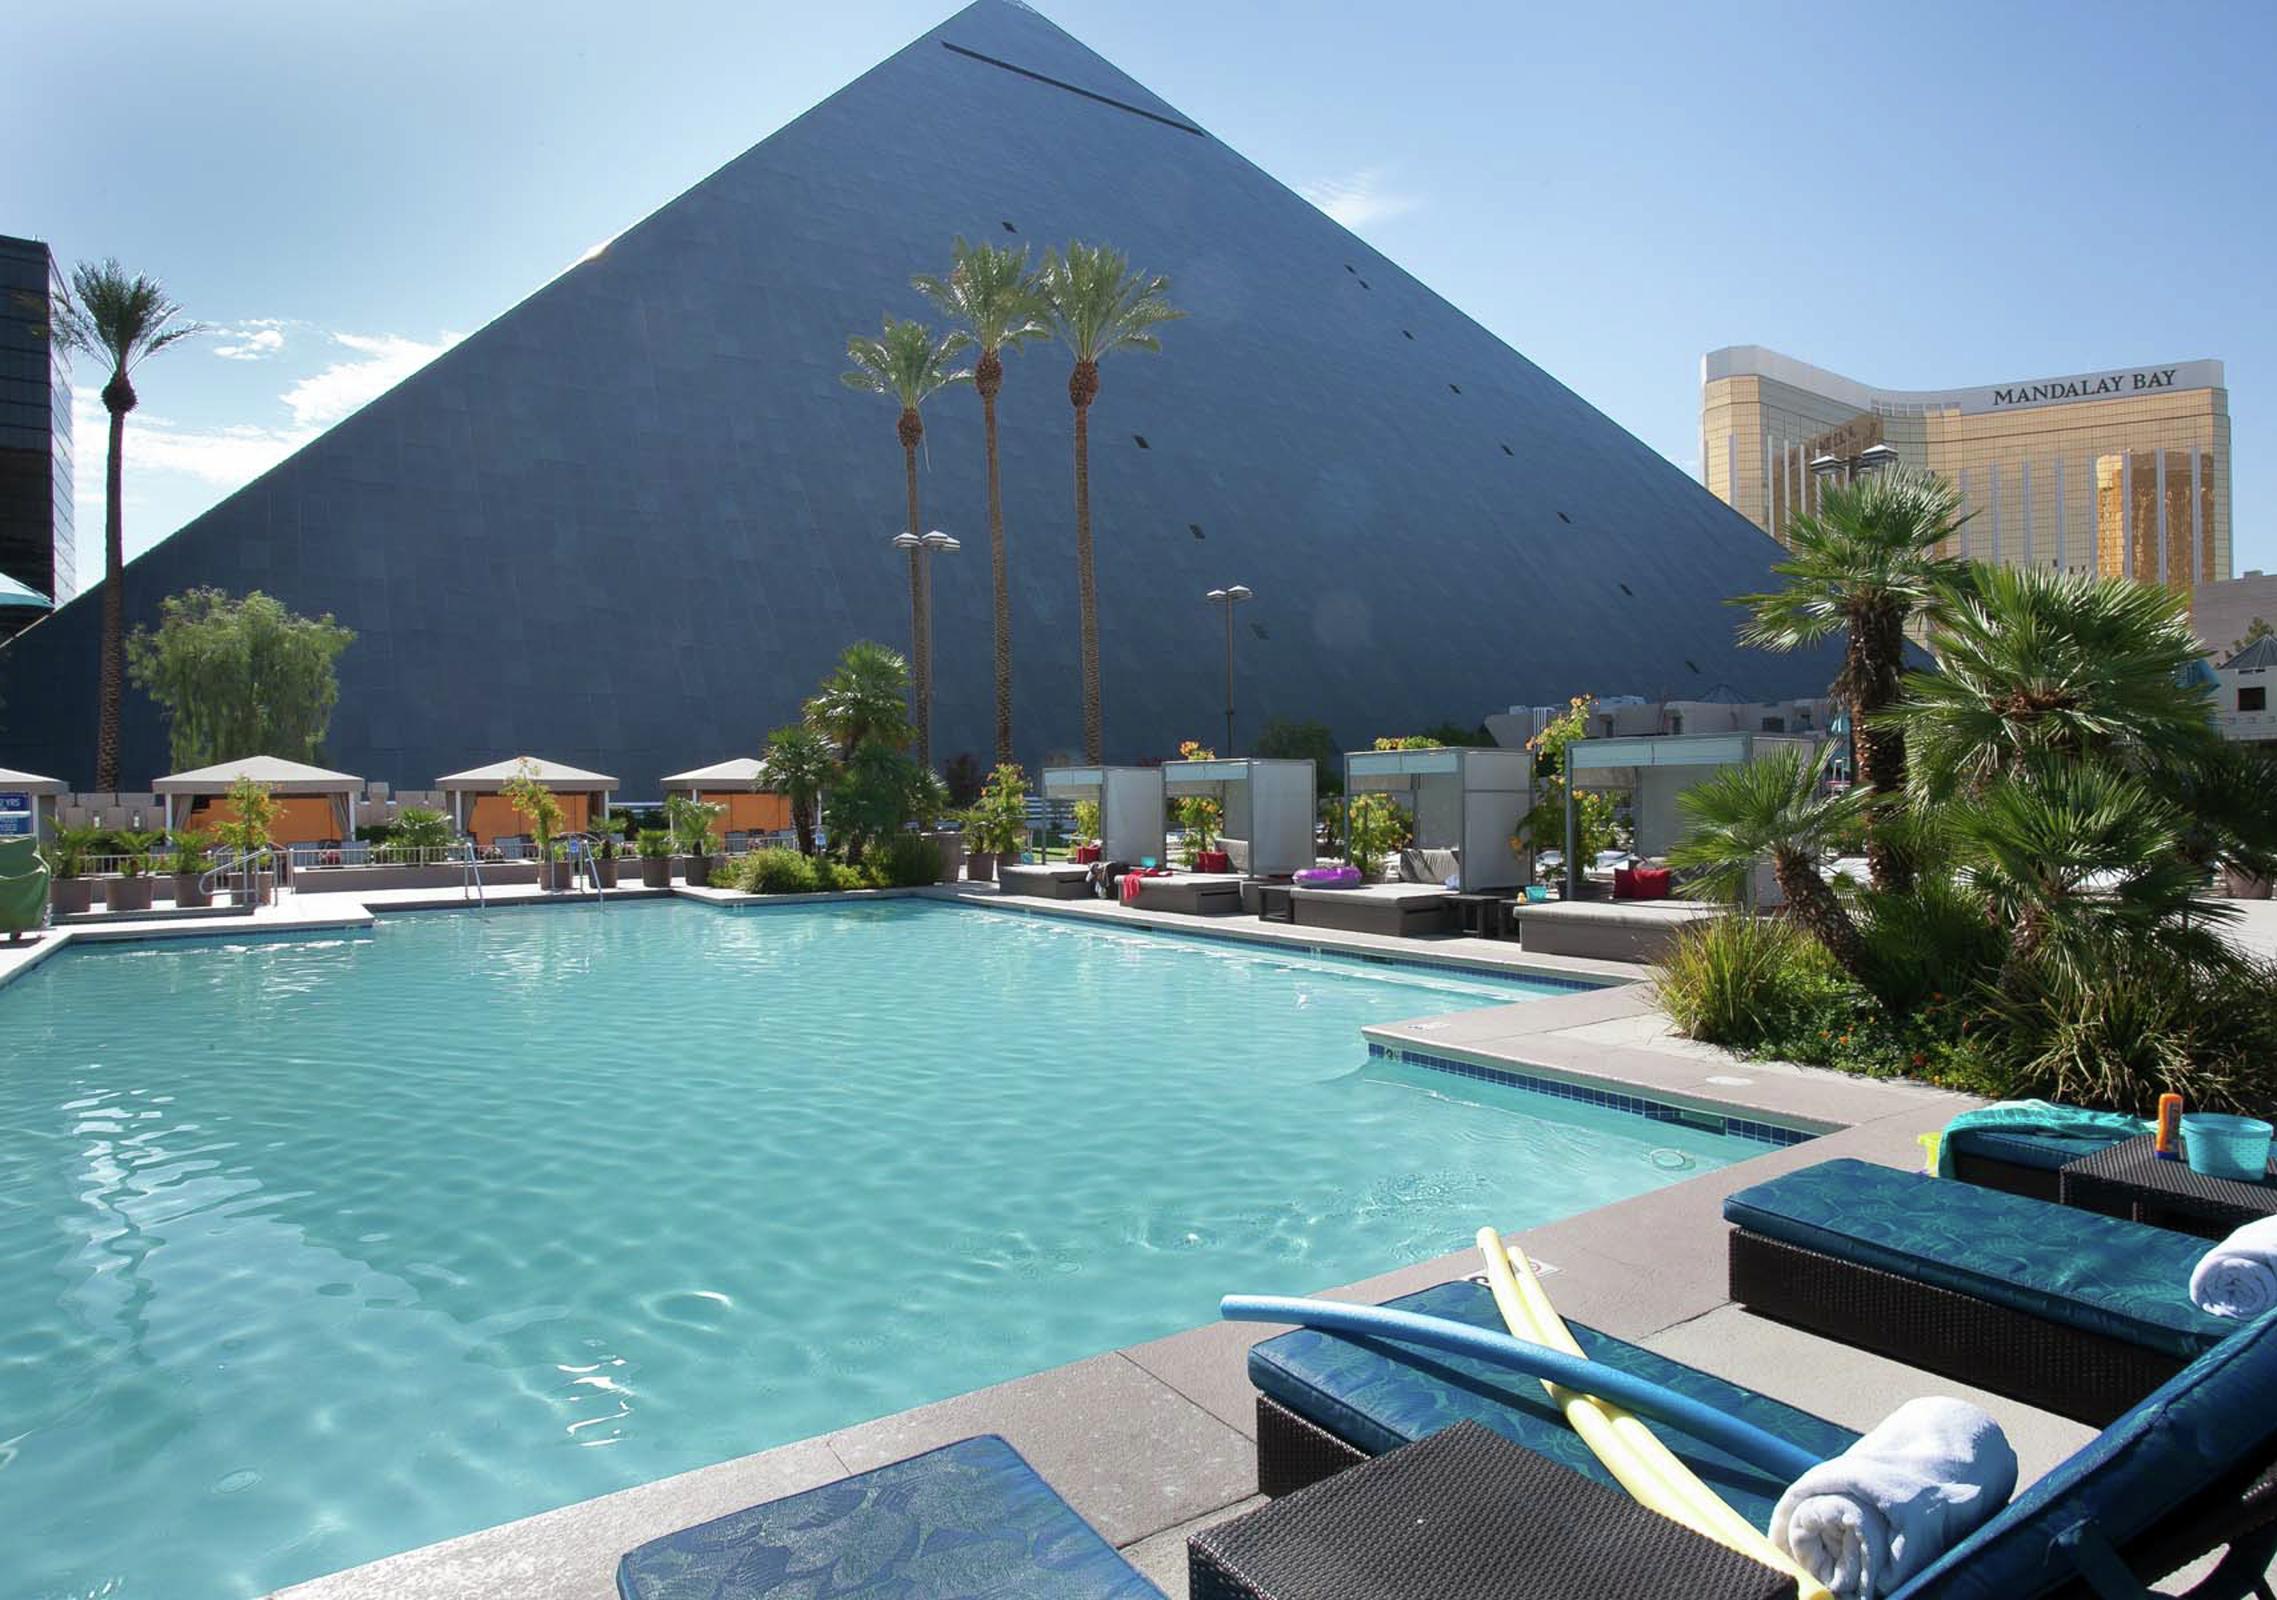 Luxor Las Vegas Pool